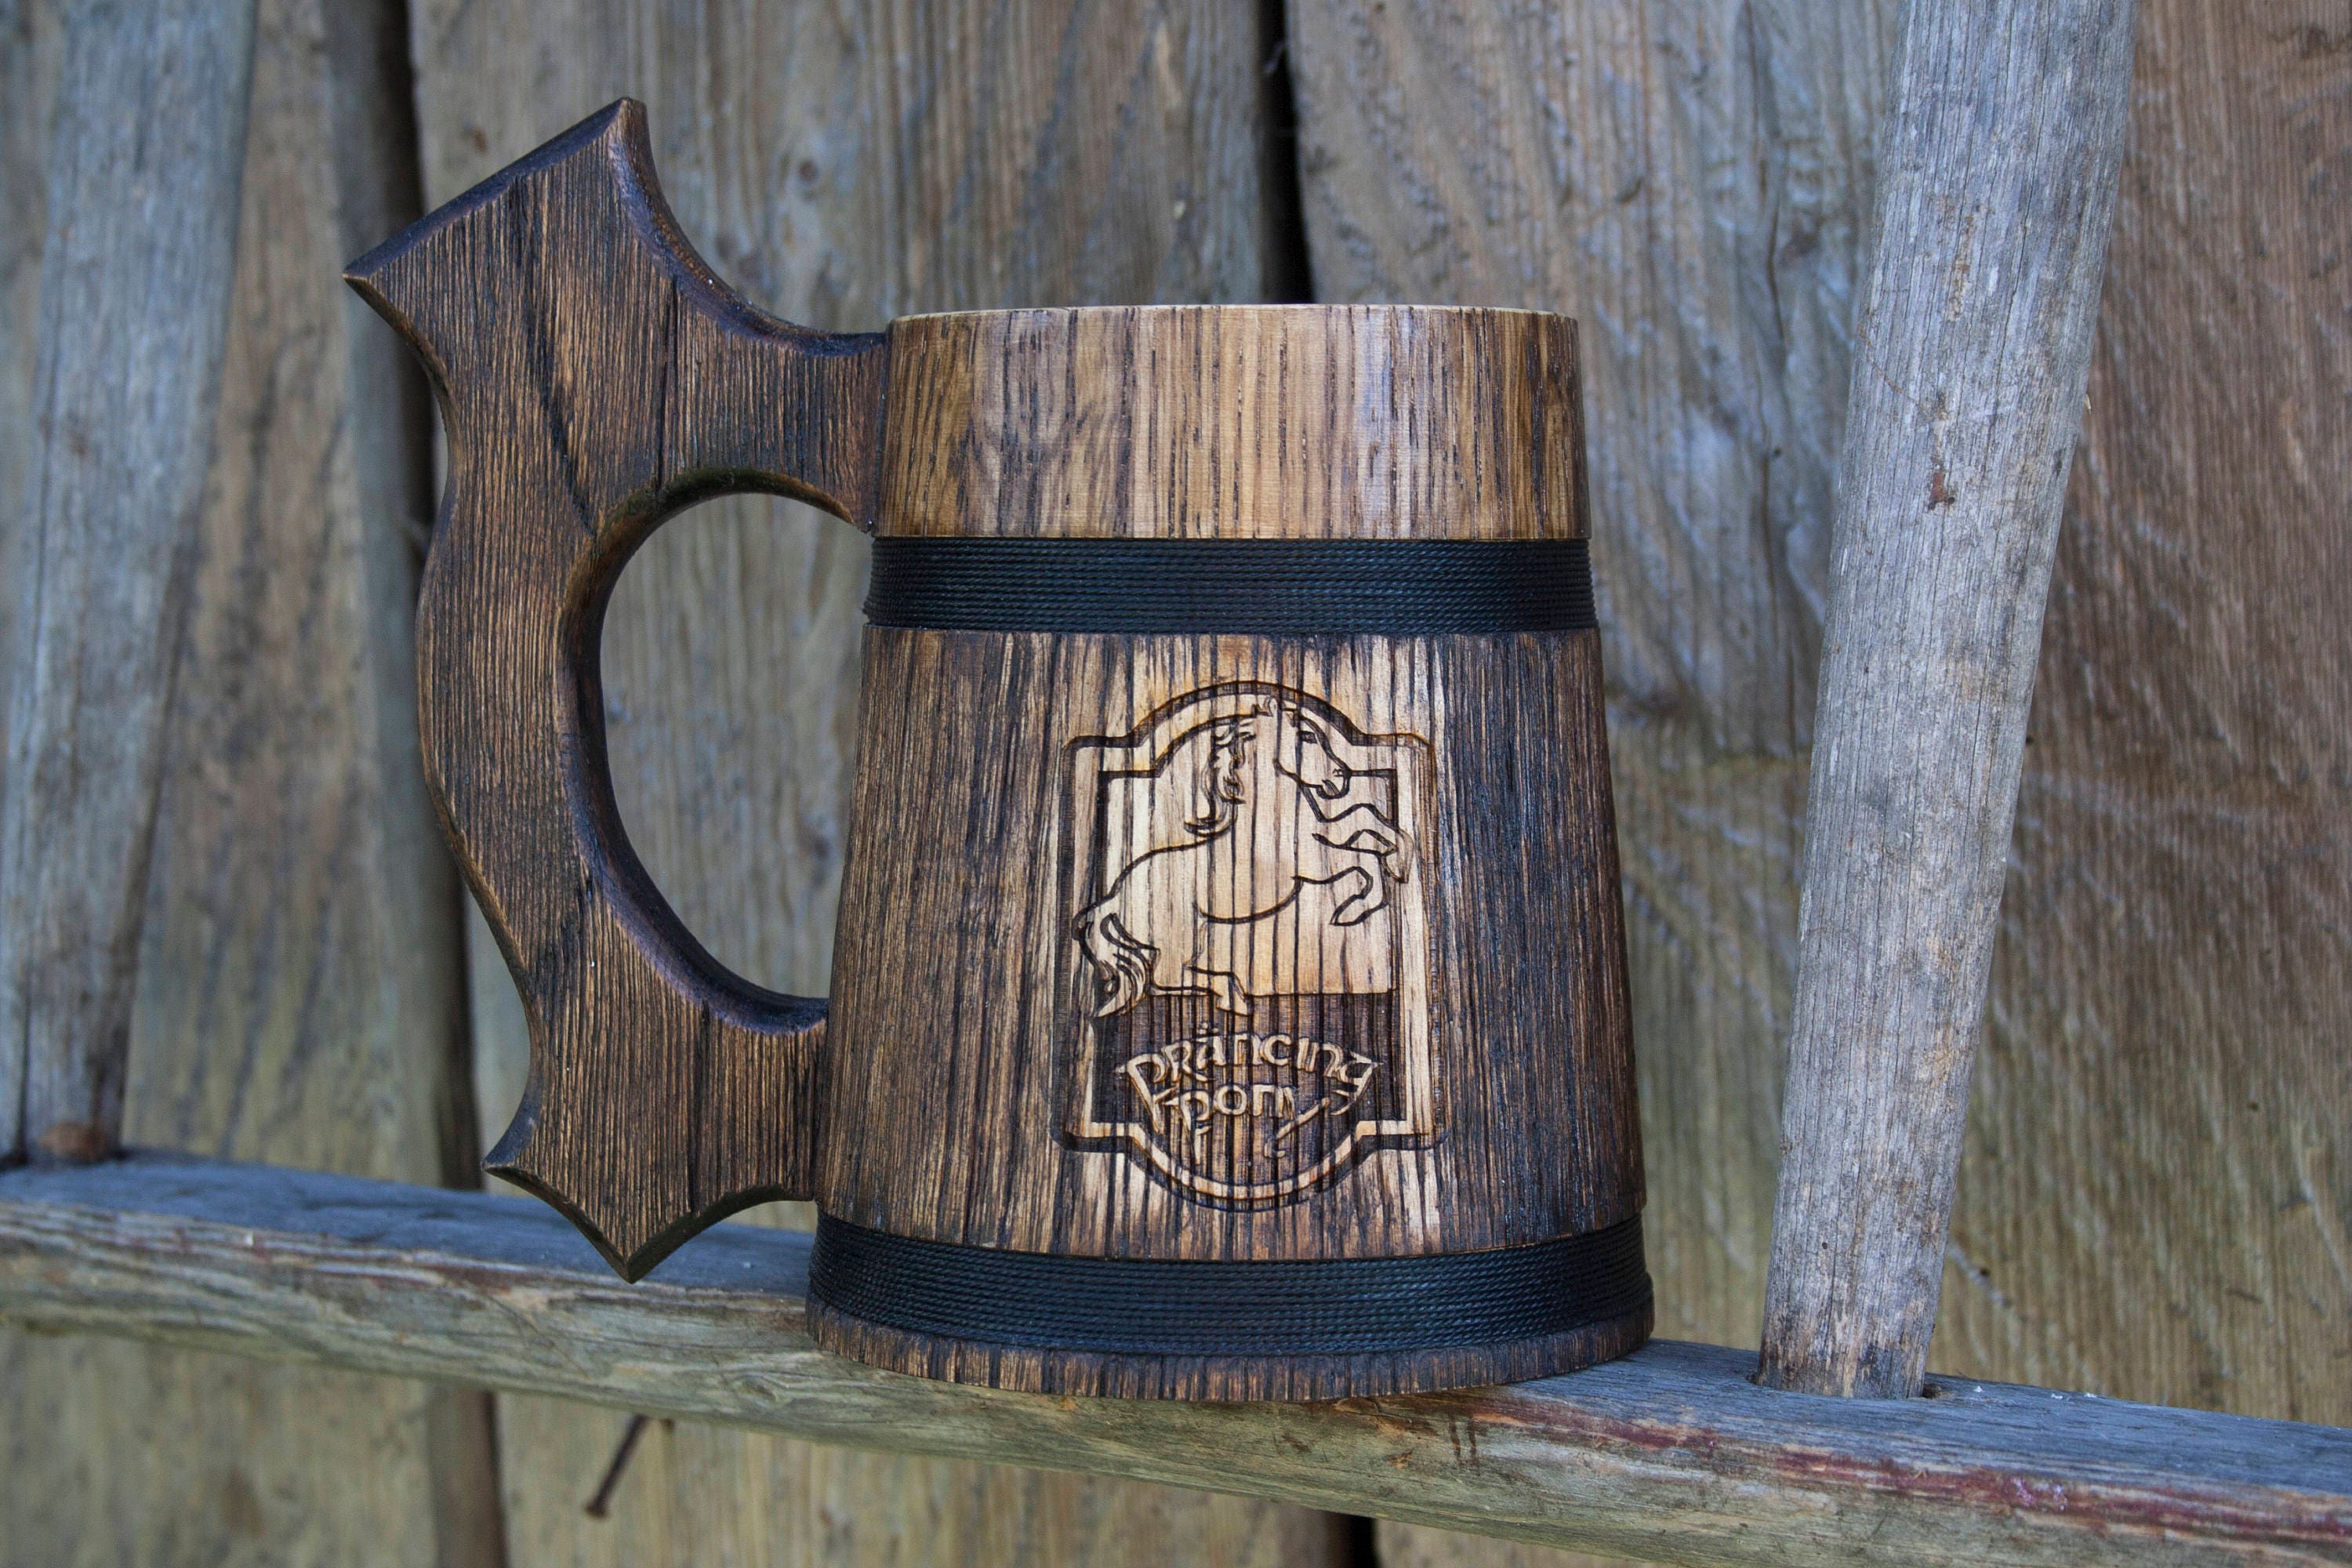 Prancing Pony Mug, Lord of the Rings Mug, Wooden Beer Mug, Tankard, Wooden  Tankard, Wood Tankard, Beer Mug, Wood Mug, Groomsmen Gift, 20oz 